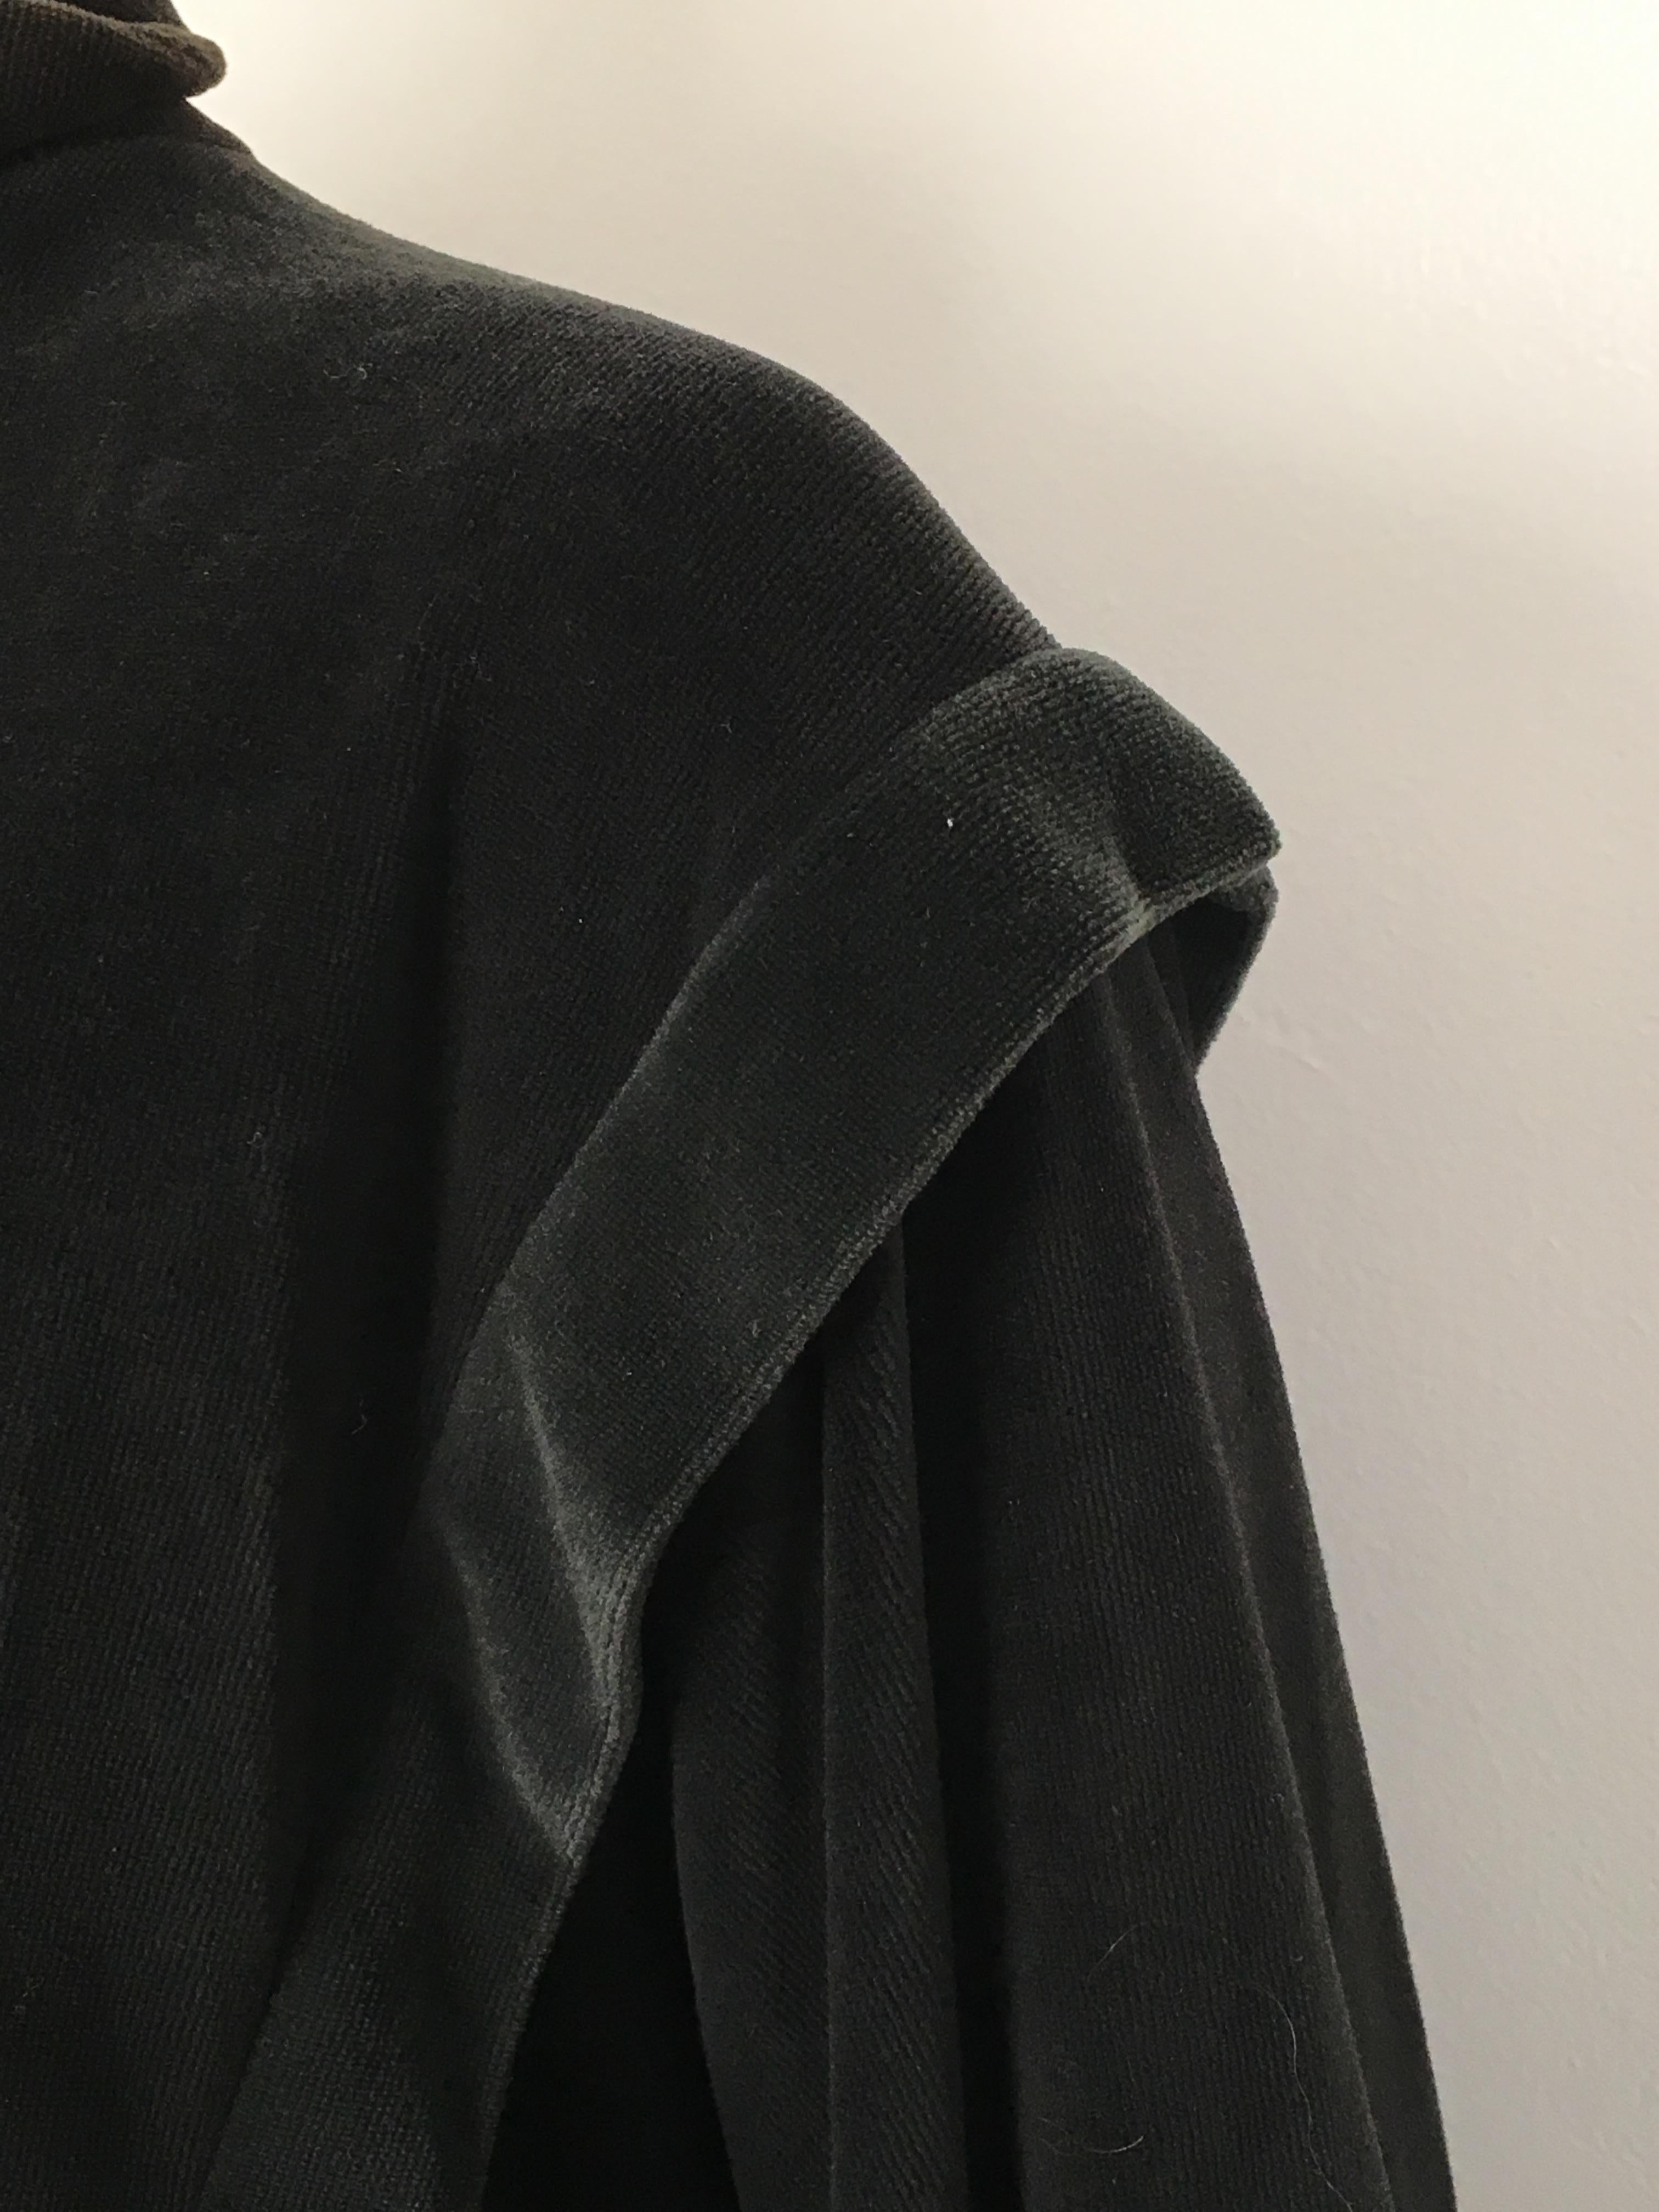 Oscar de la Renta 1980s Black Velour Active Wear Jacket Size Medium. For Sale 2